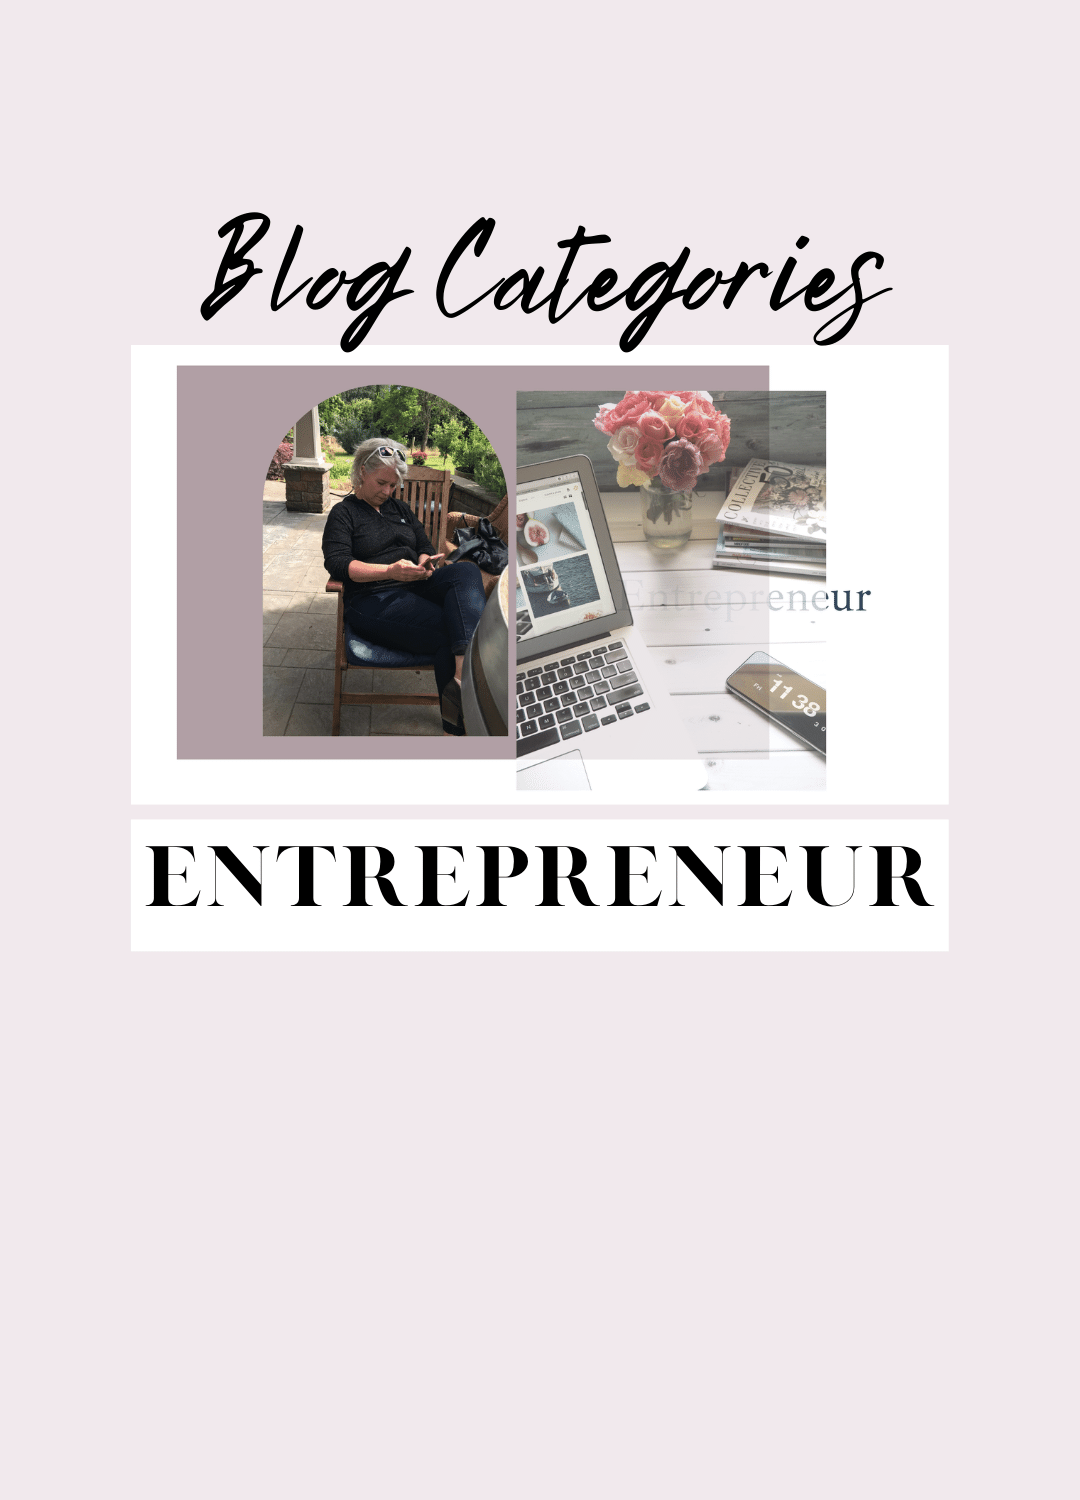 Entrepreneurial Blog